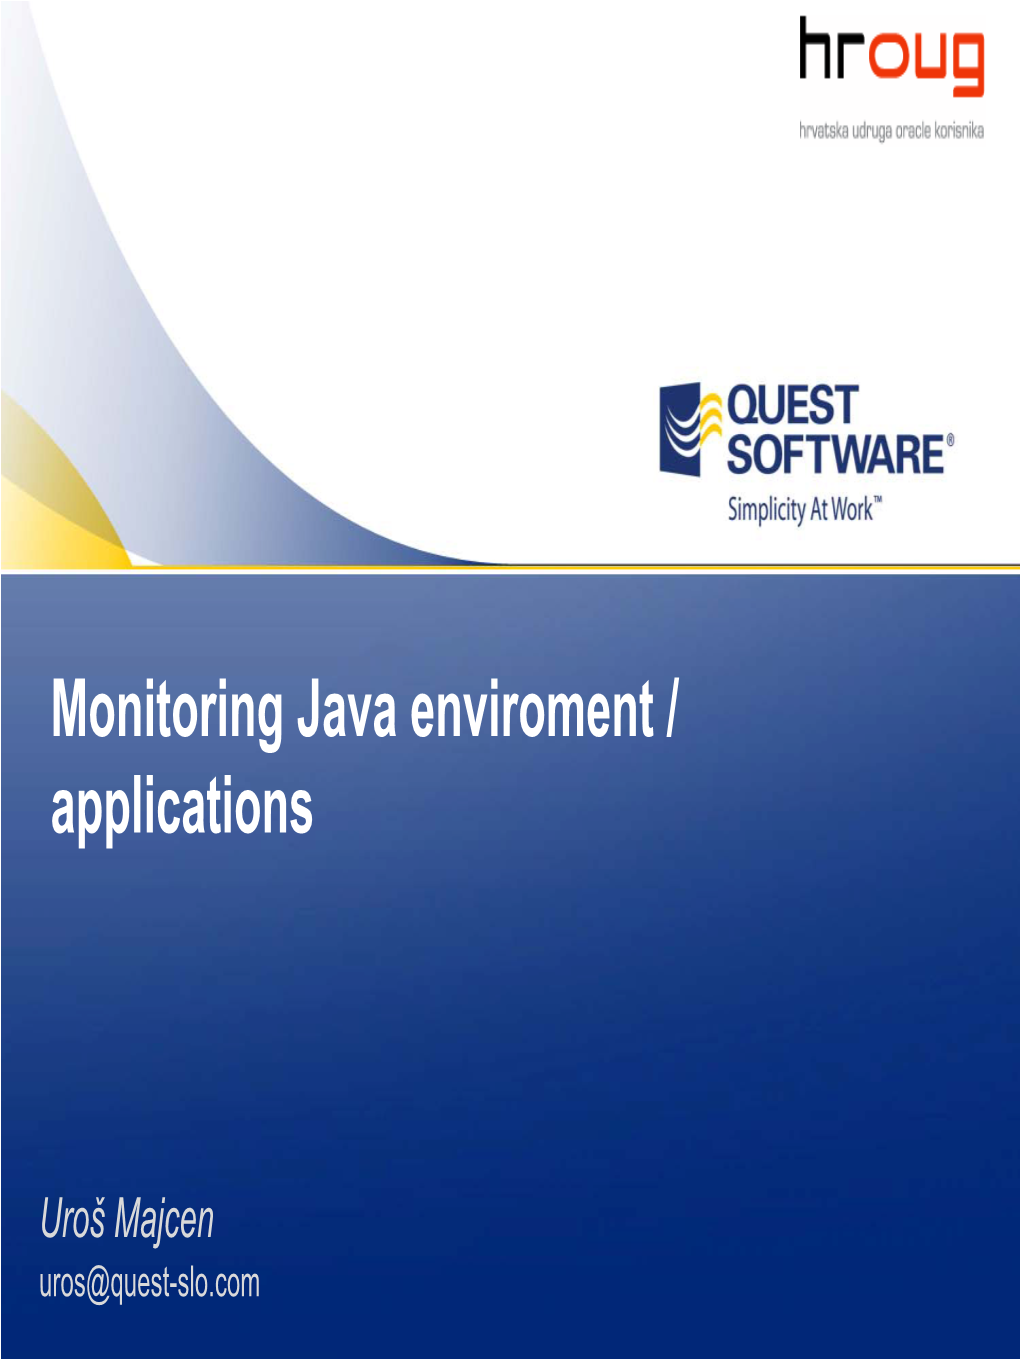 J2EE Application Performance Management